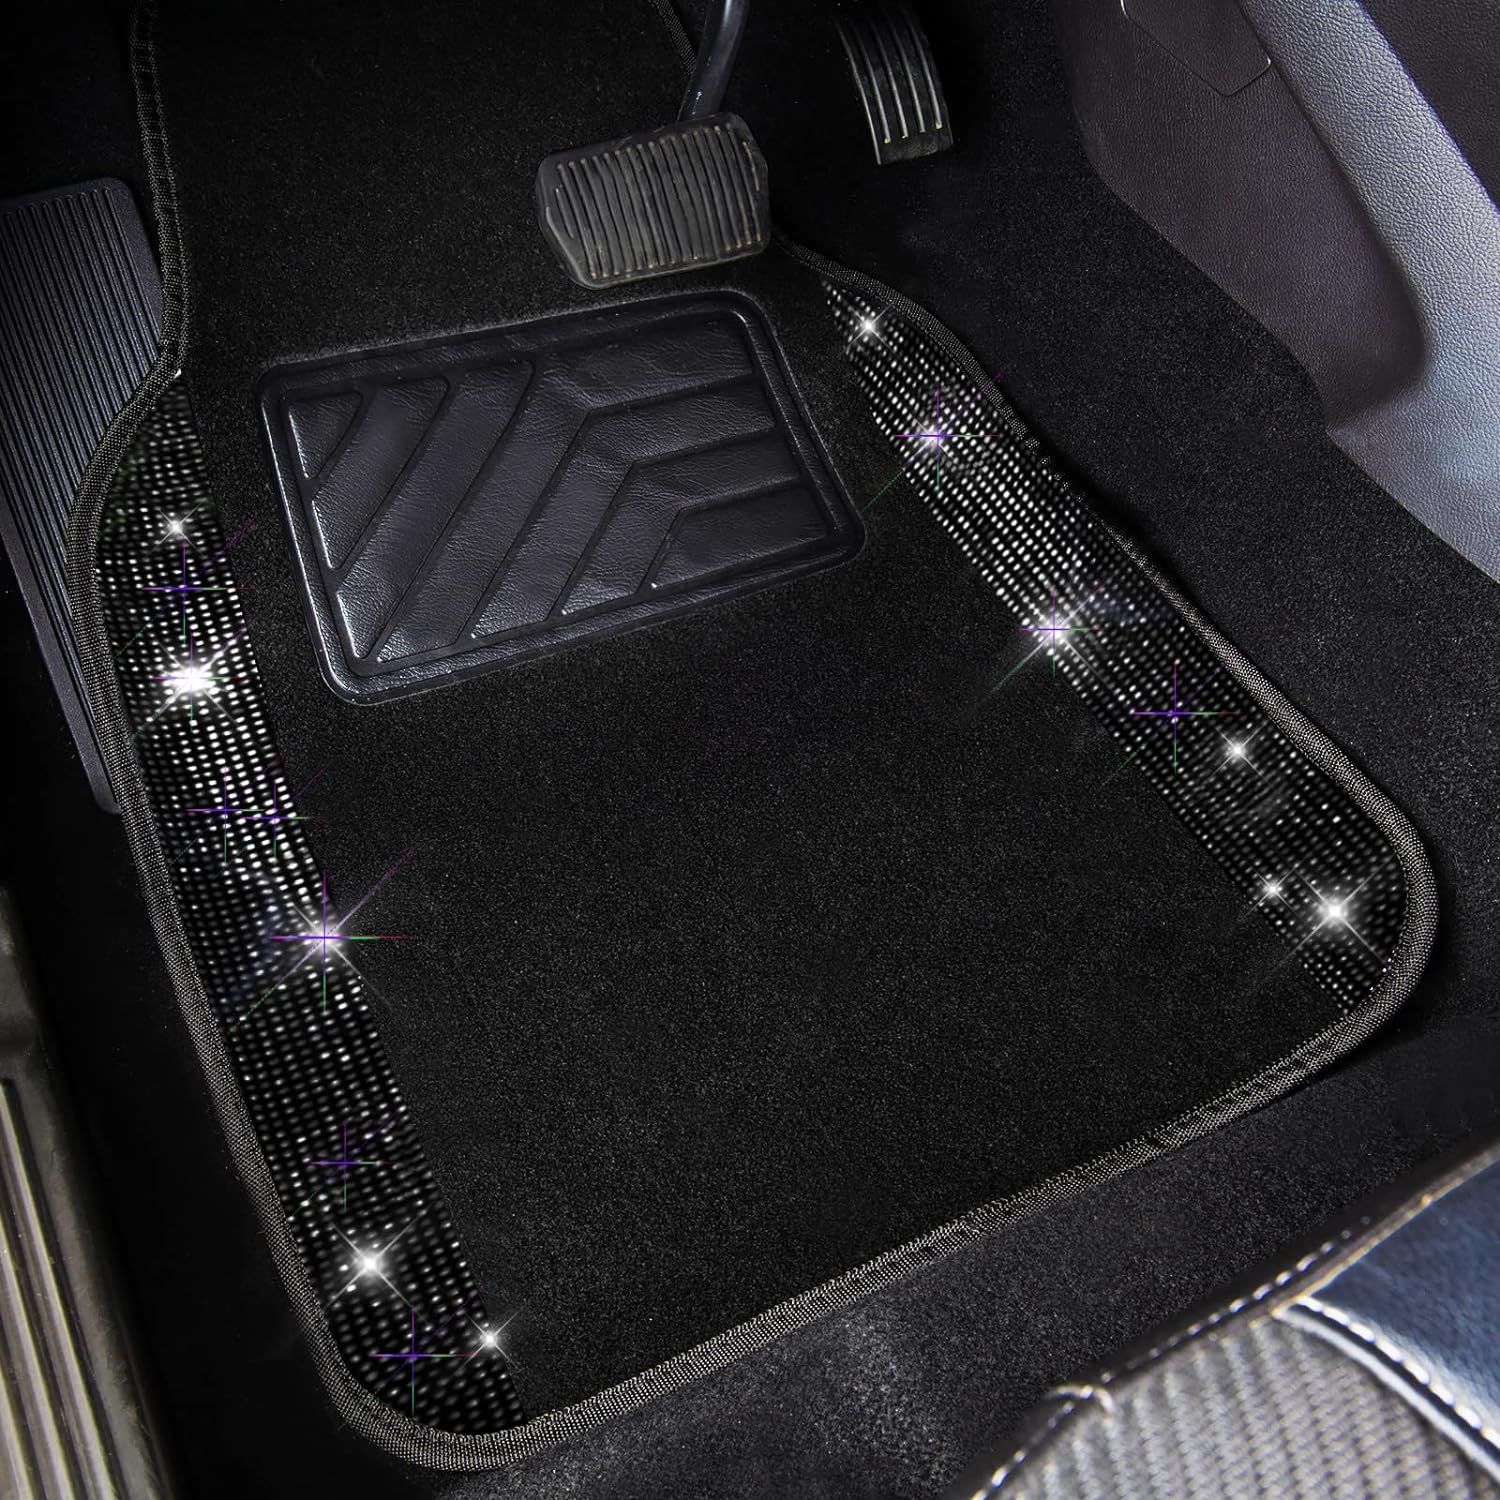 CAR PASS Bling Diamond Leather Steering Wheel Cover, Bling Rhinestones Diamond Universal Waterproof Car Floor Mat, Two Front Car Seat Covers